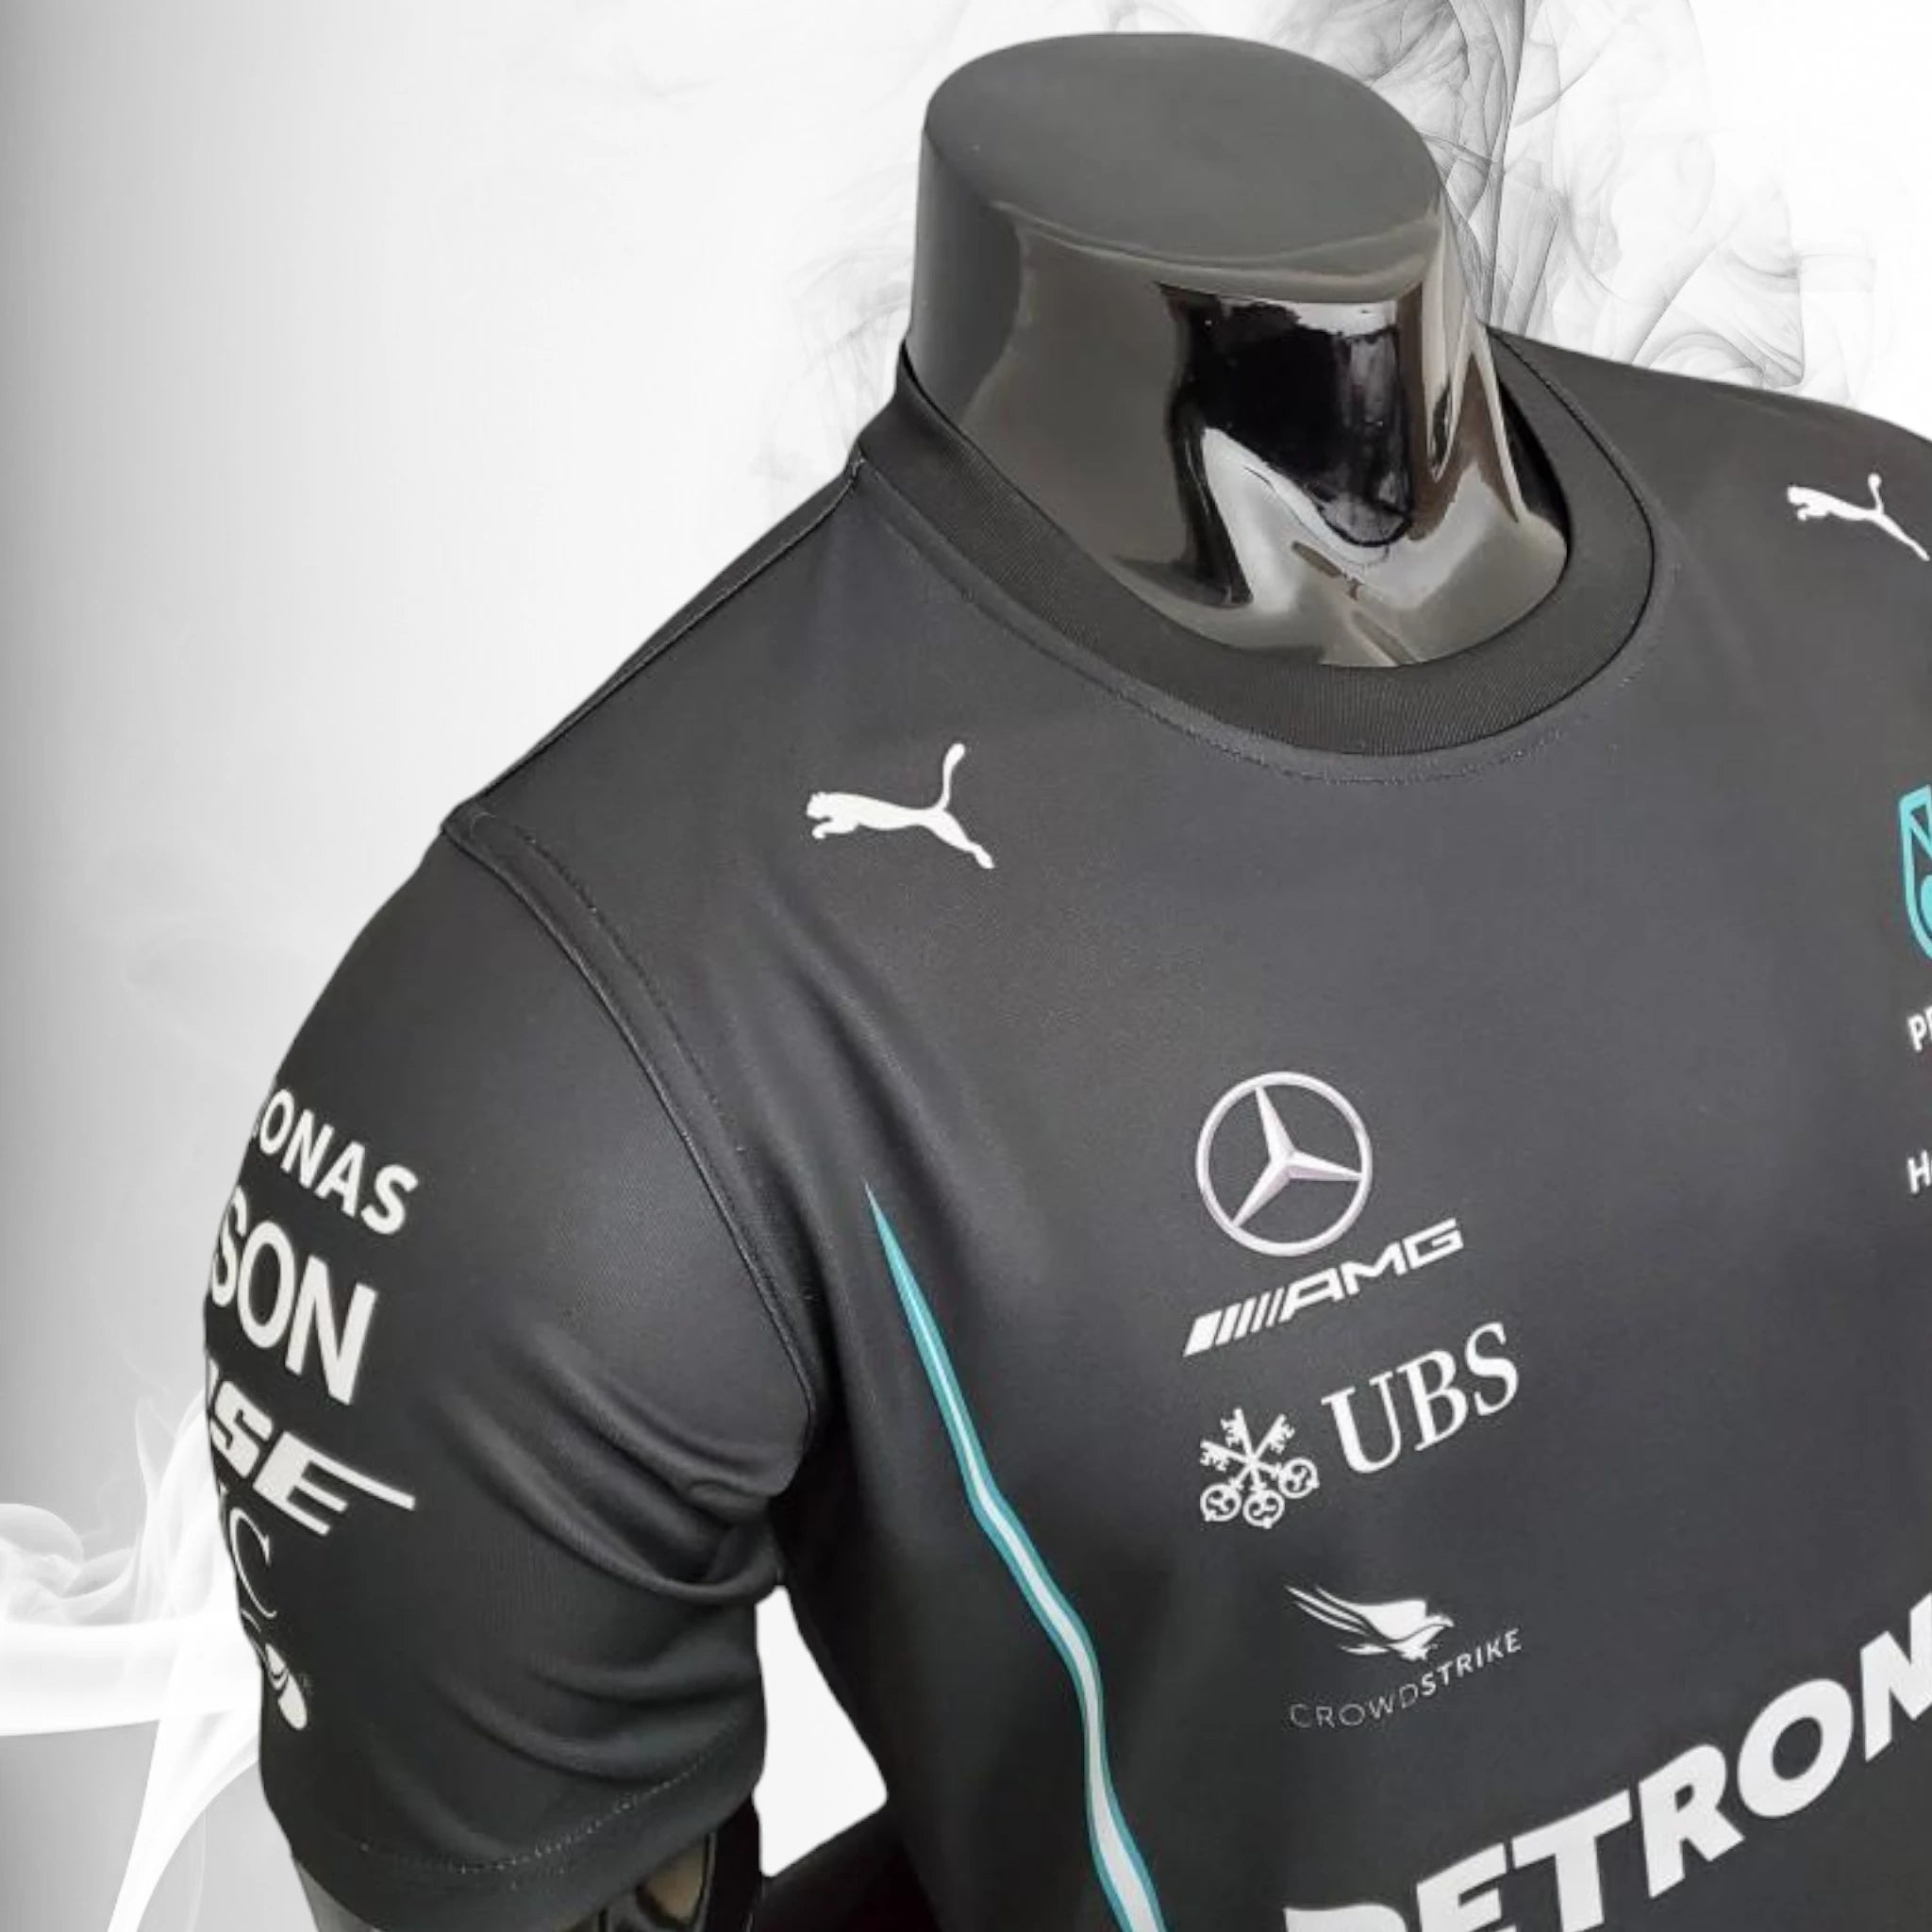 2021 Mercedes Lewis Hamilton Formula One T-Shirt